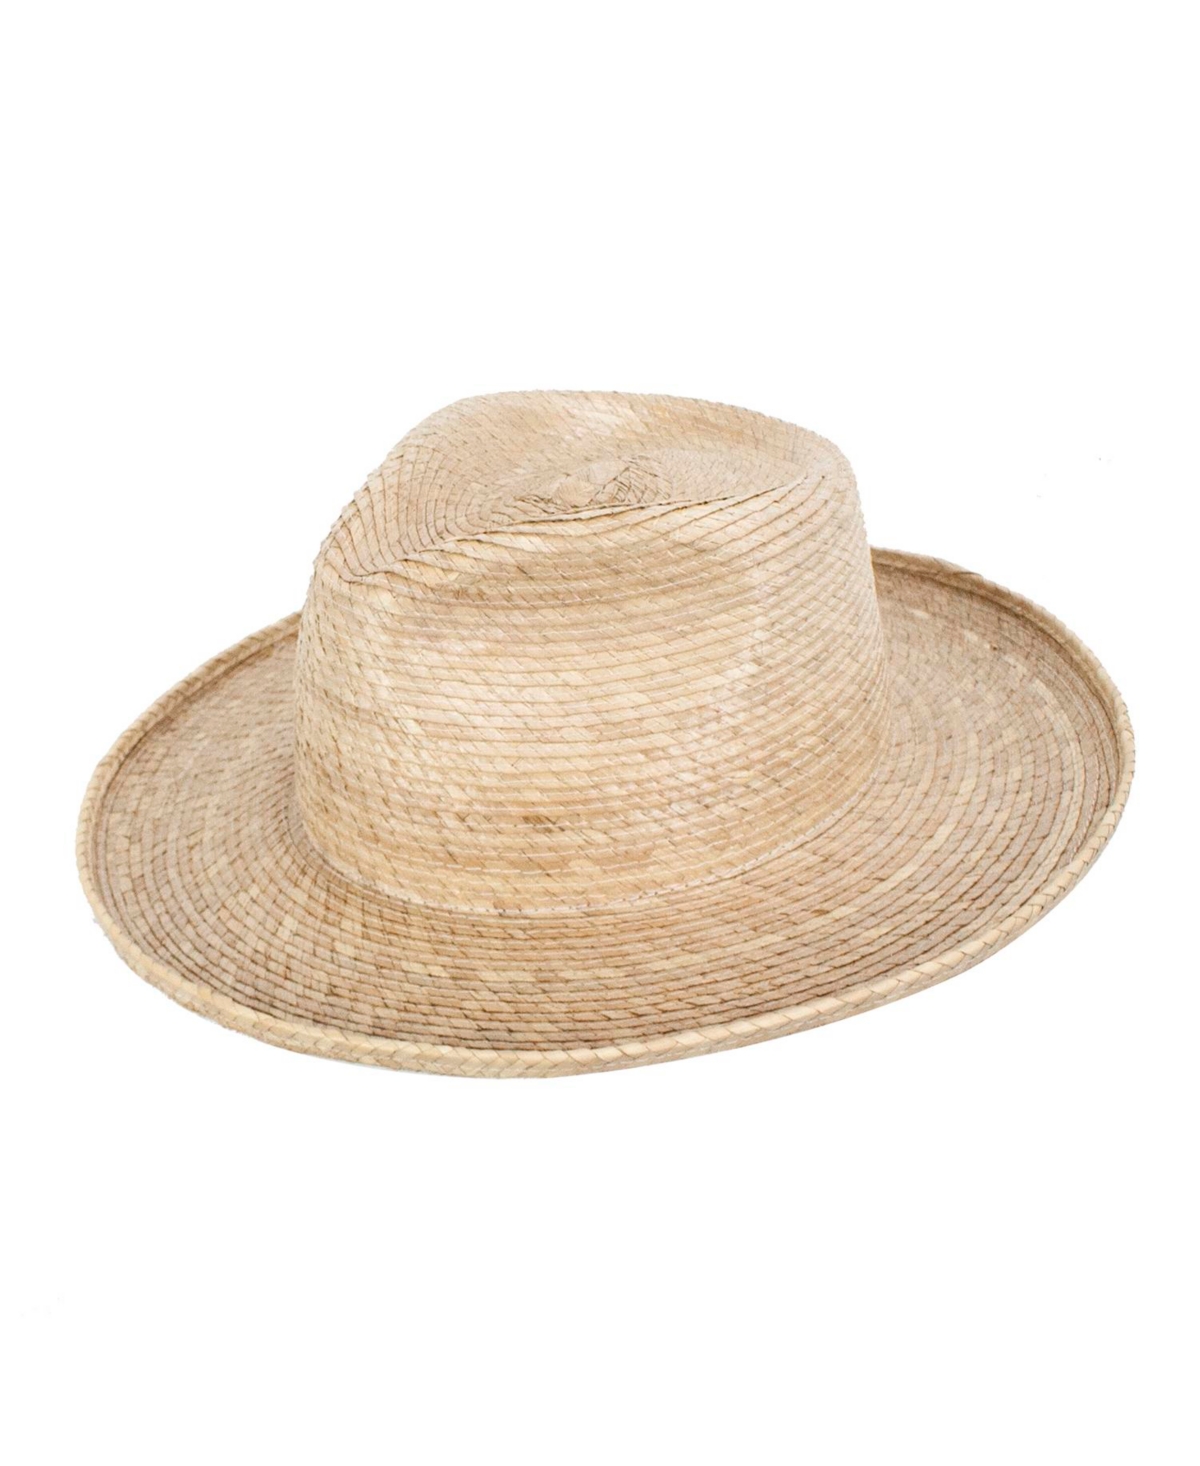 Silas Palmilla Straw Resort Hat - Natural